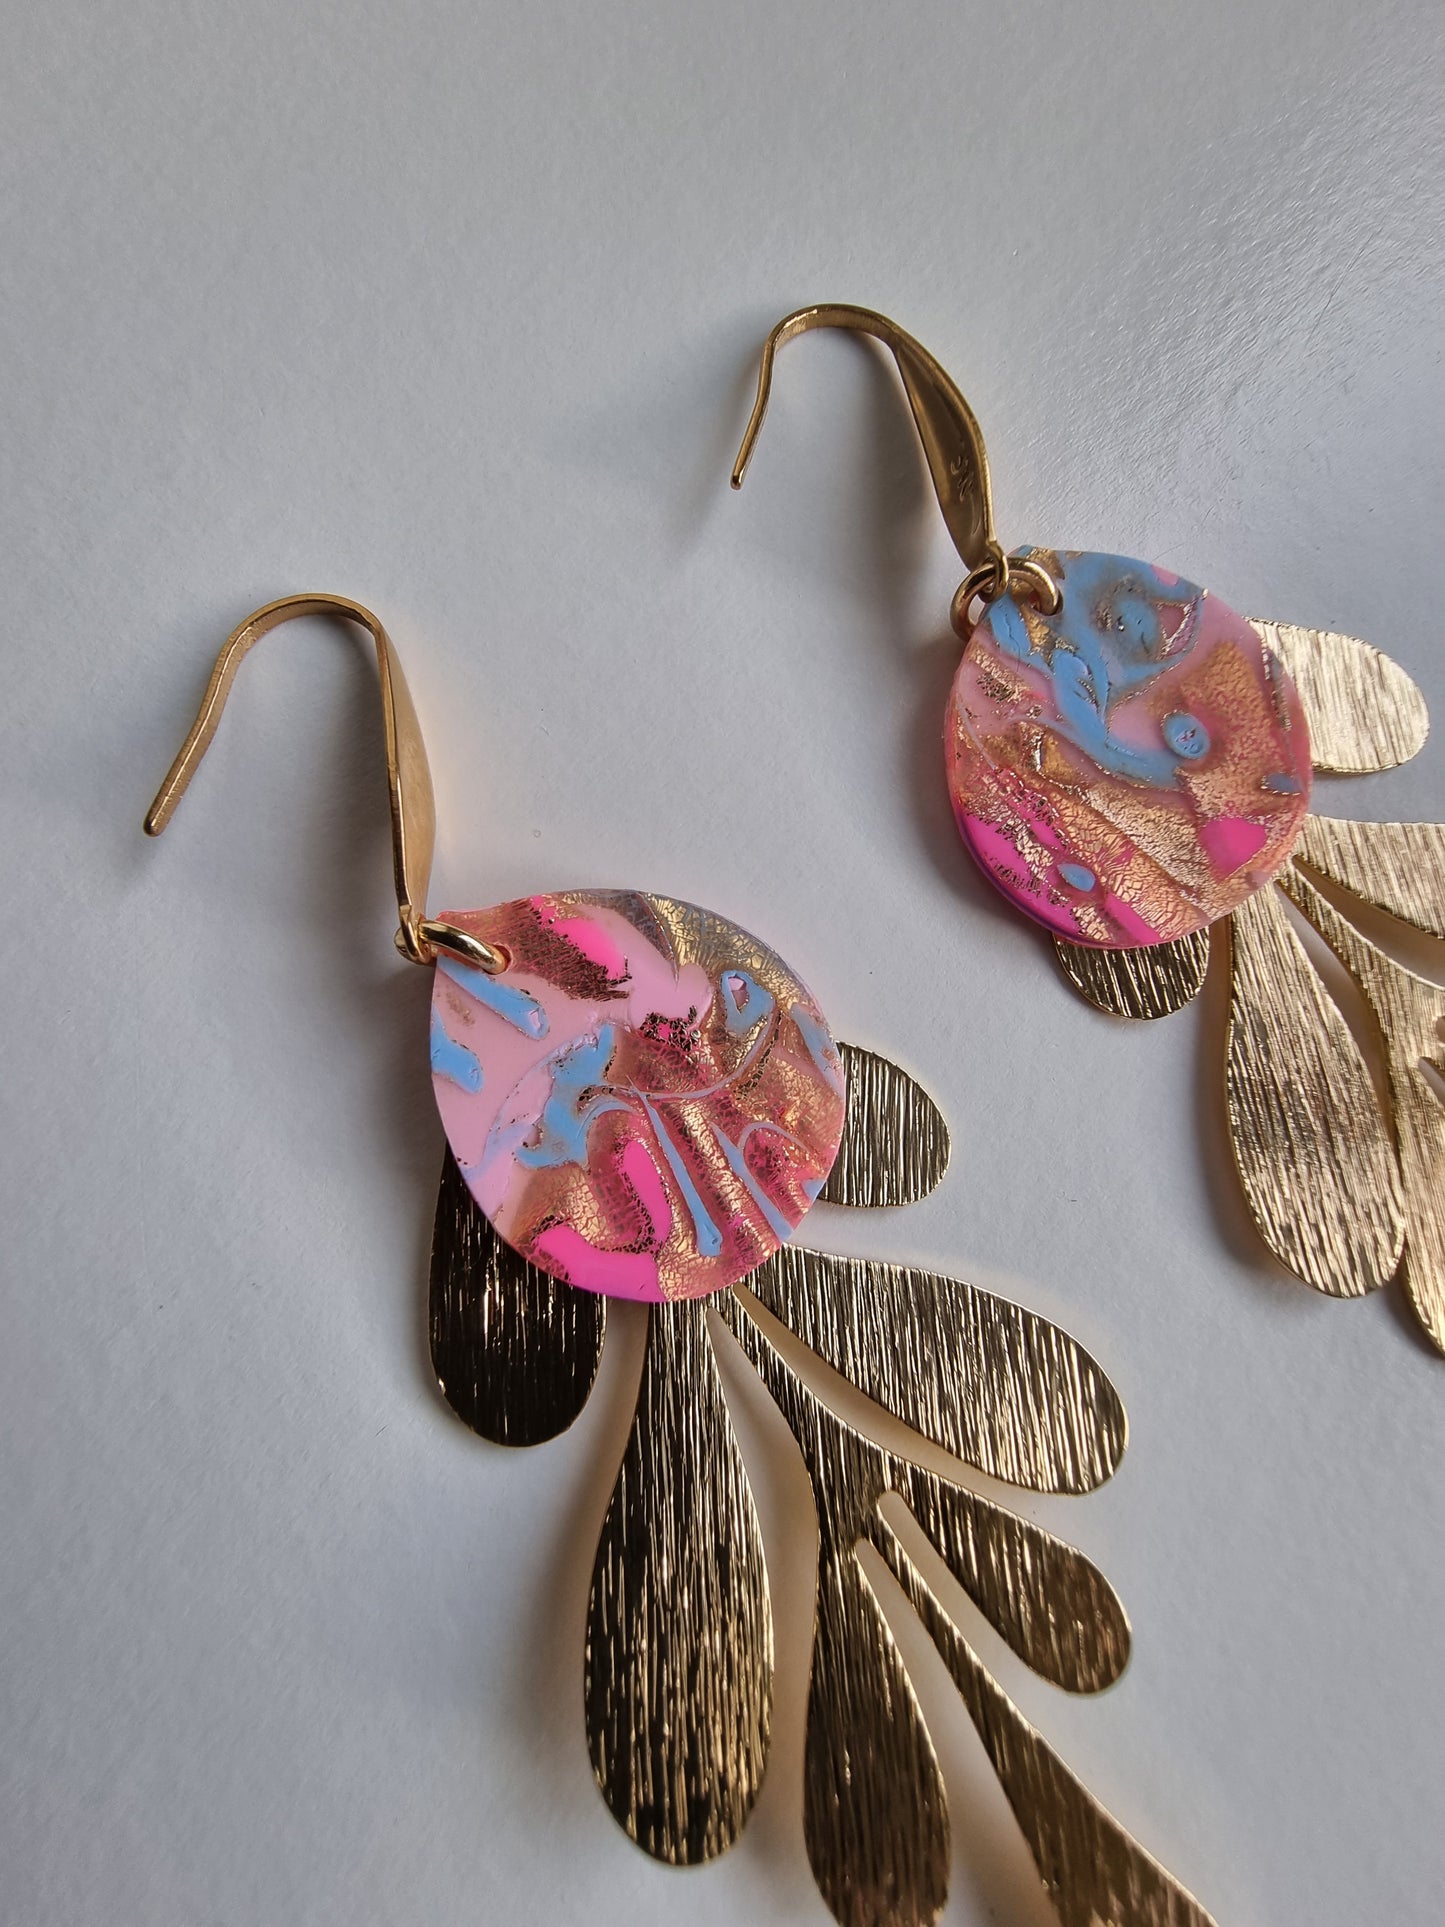 Hot Pink and Gold Mokume gane dangling earrings